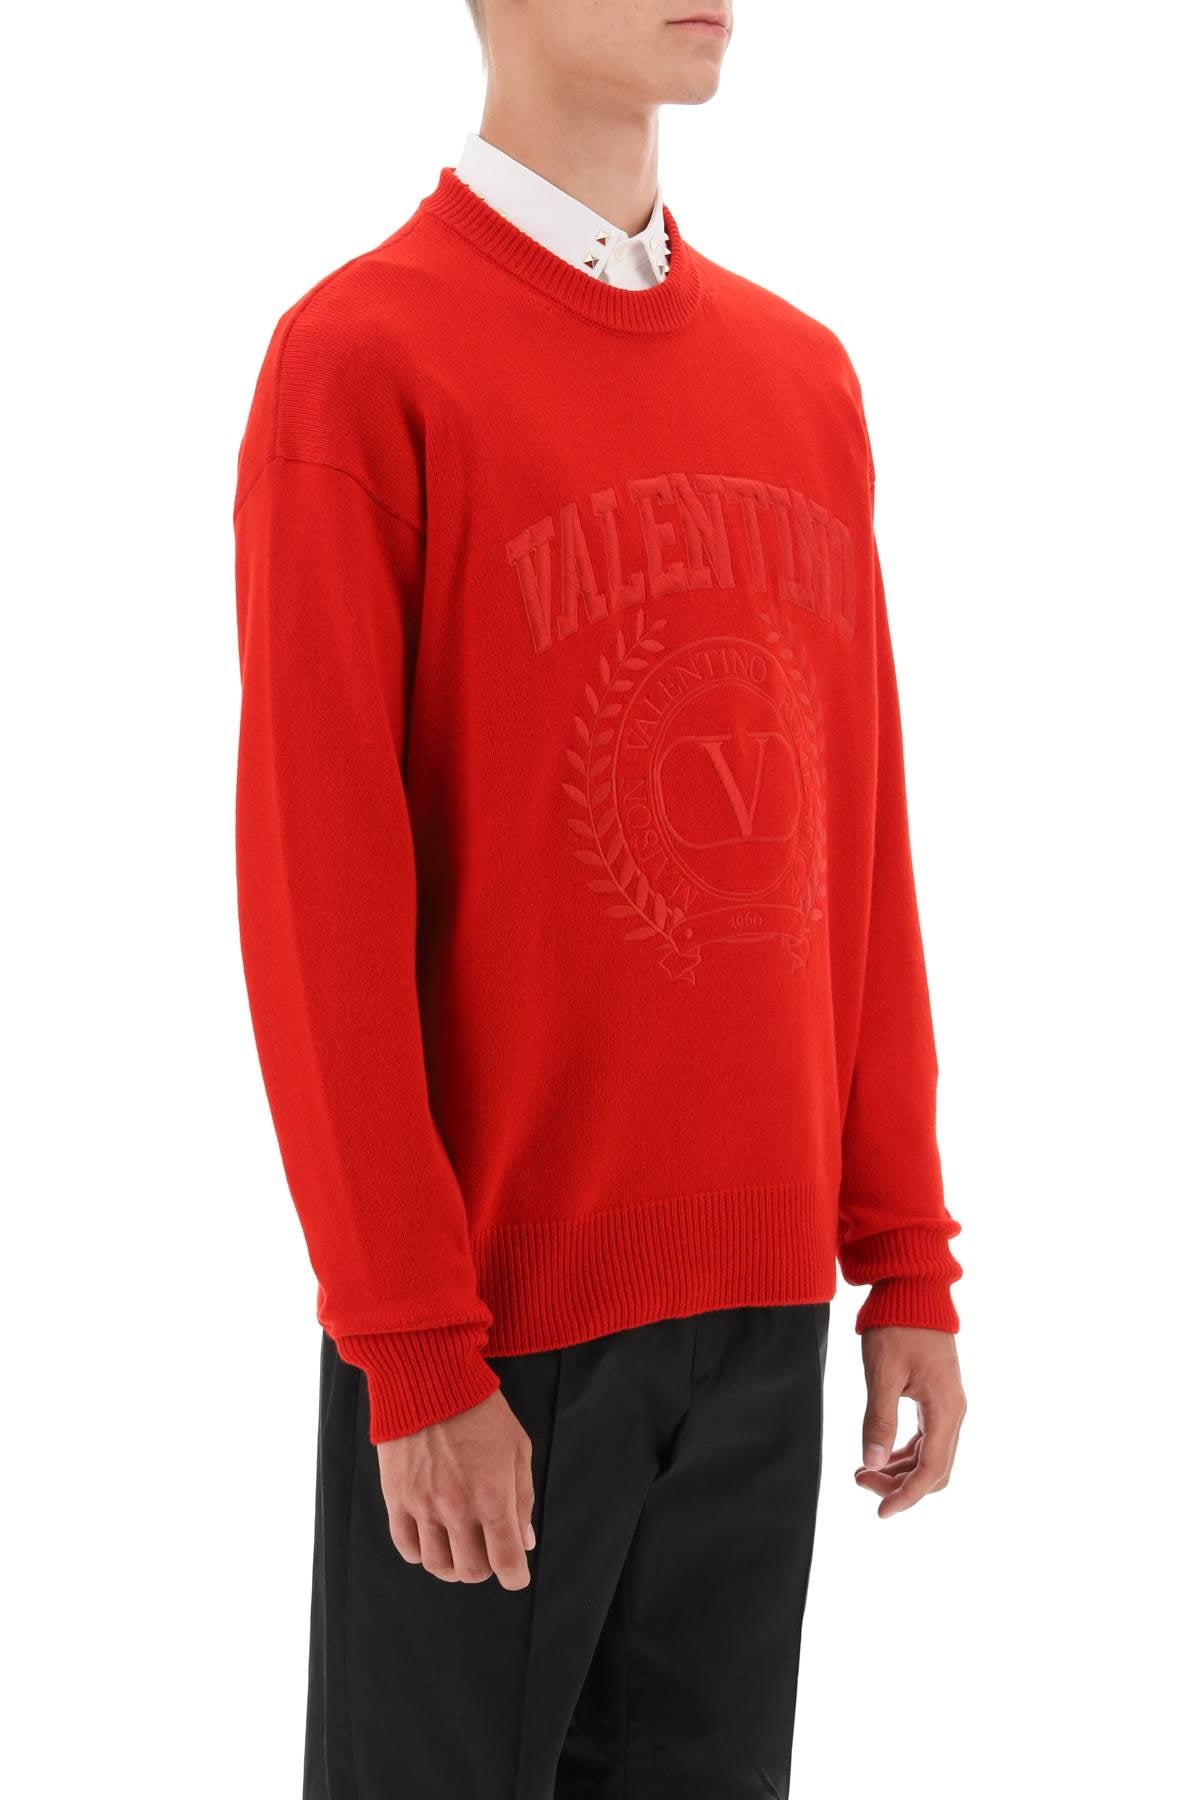 Valentino GARAVANI Valentino garavani crew-neck sweater with maison valentino embroidery